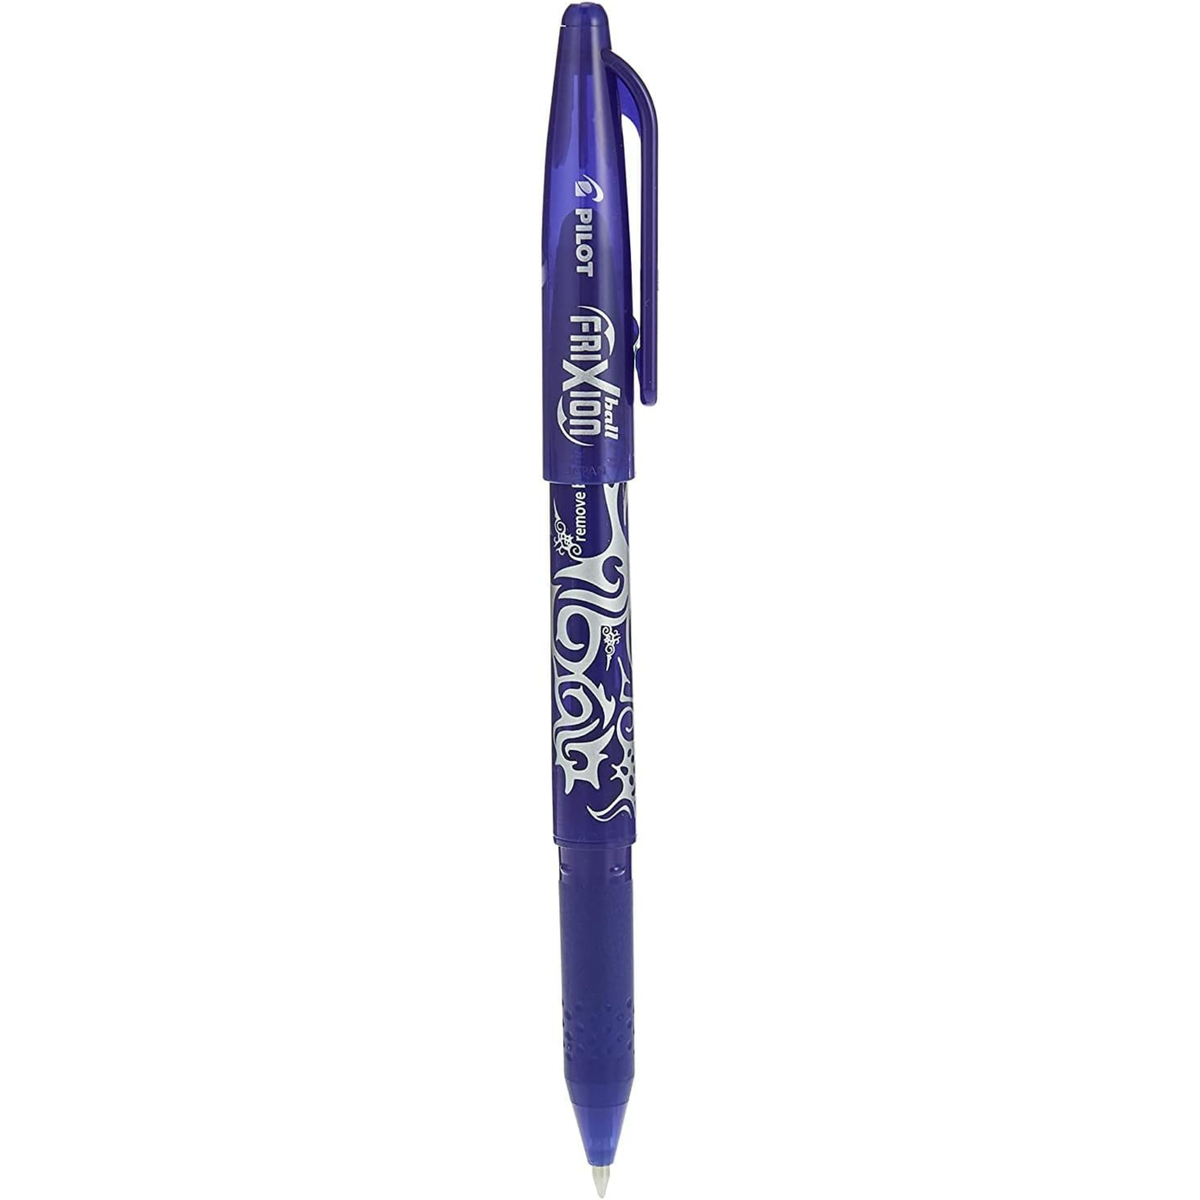 Pilot Frixion erasable pens refill, 9 refill bundle Blue color gel ink fine  point 07 (Blue) : Office Products 